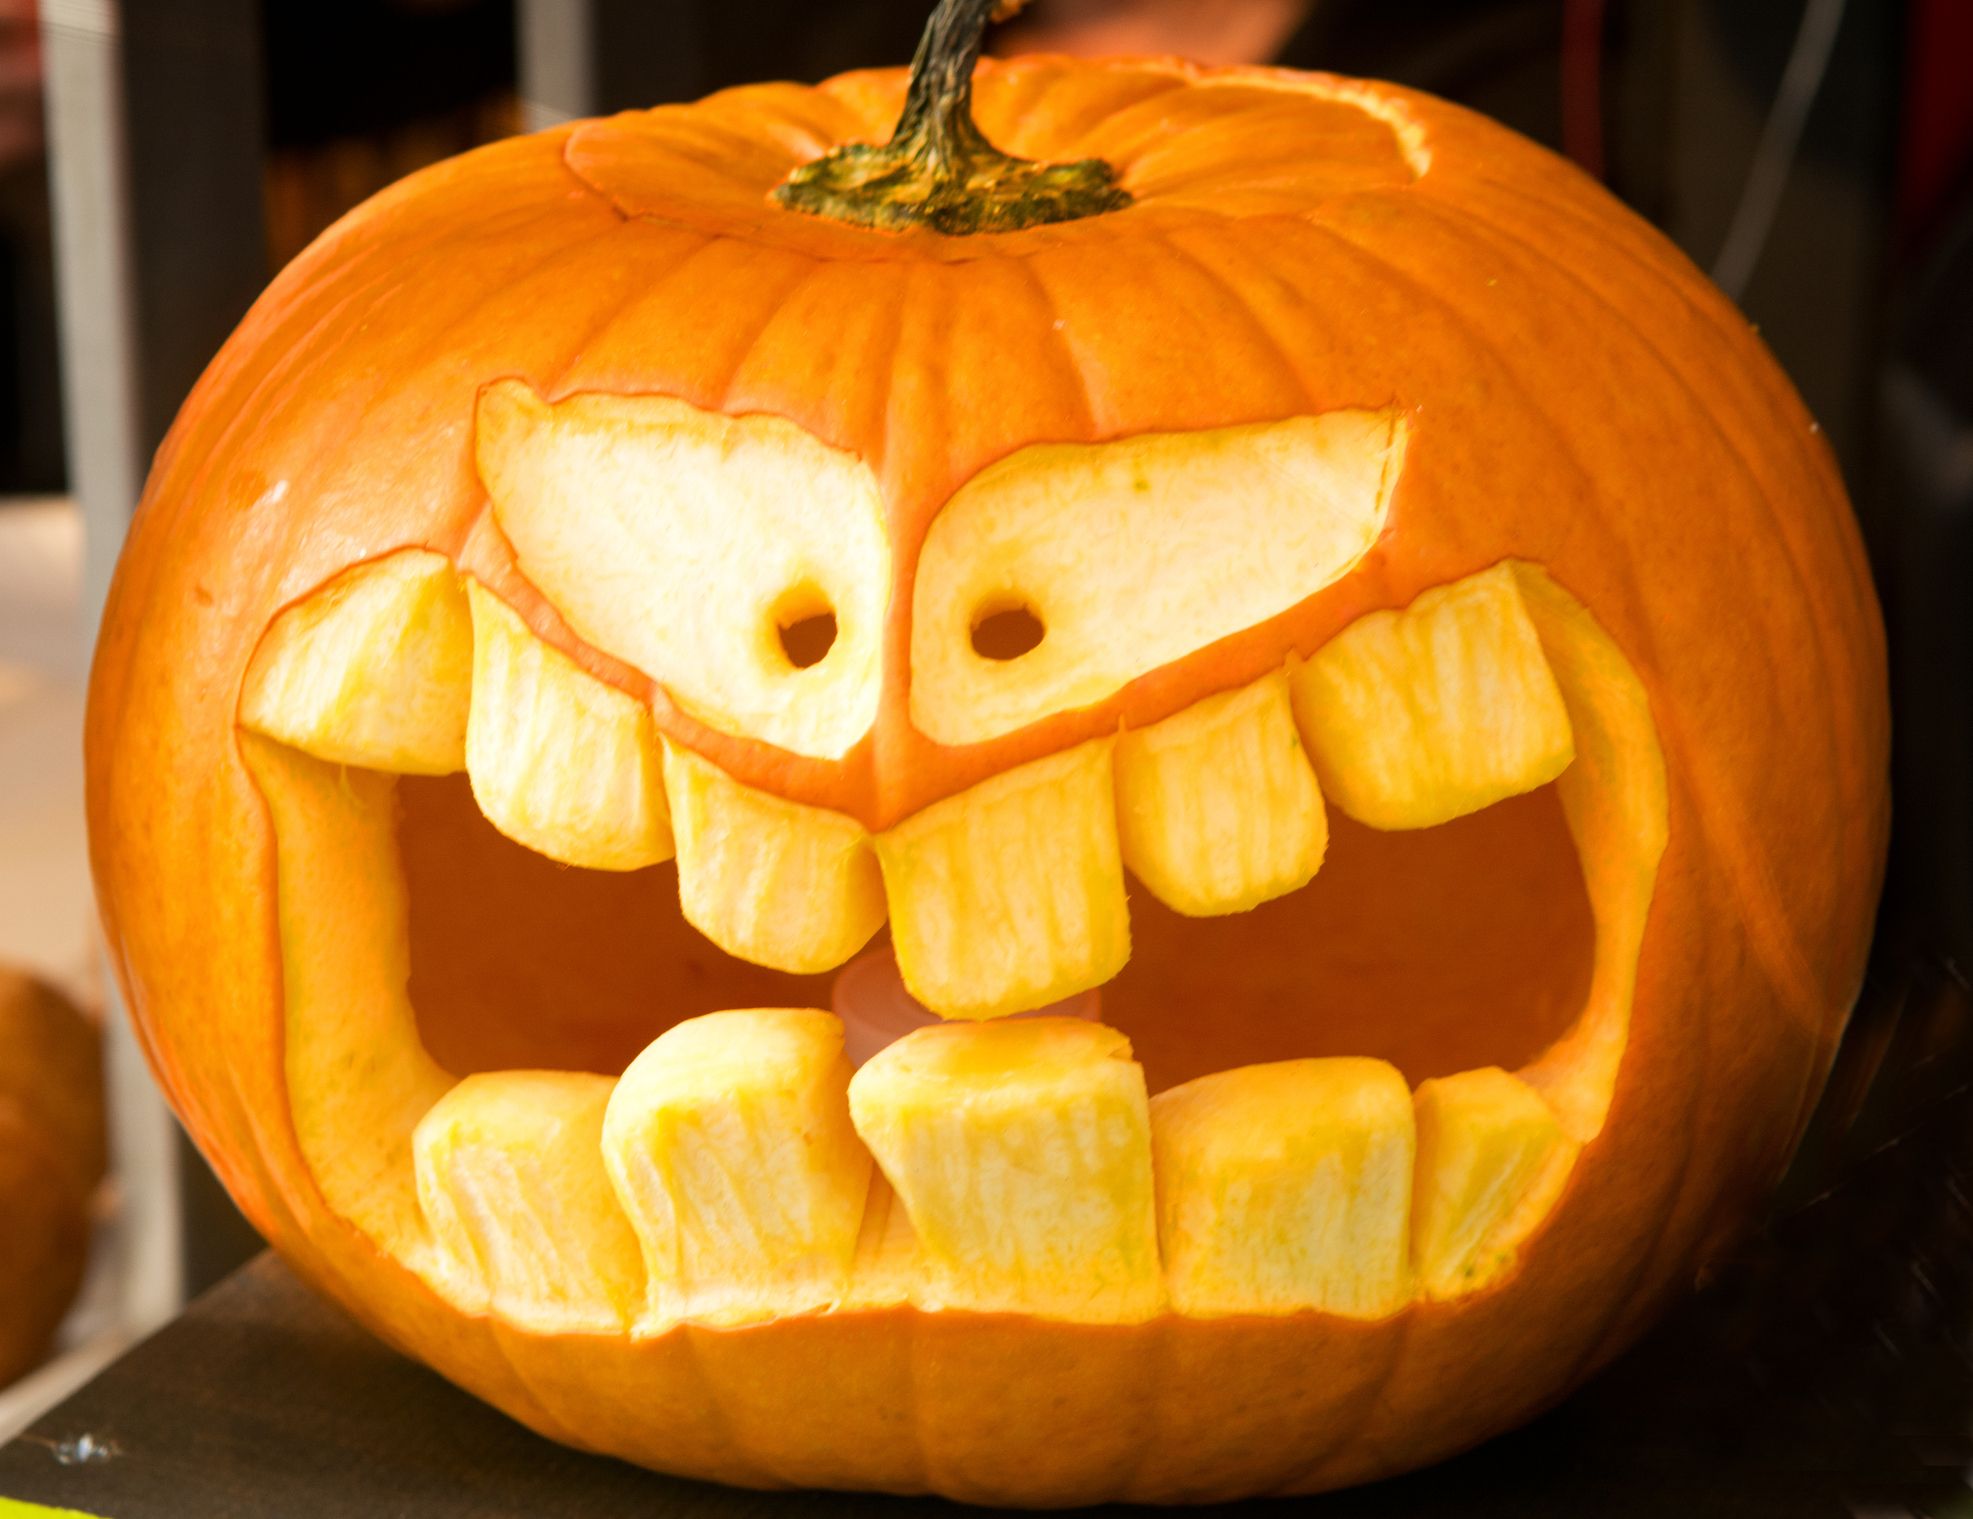 75 Cool Pumpkin Carving Designs - Creative Ideas for Jack-O'-Lanterns